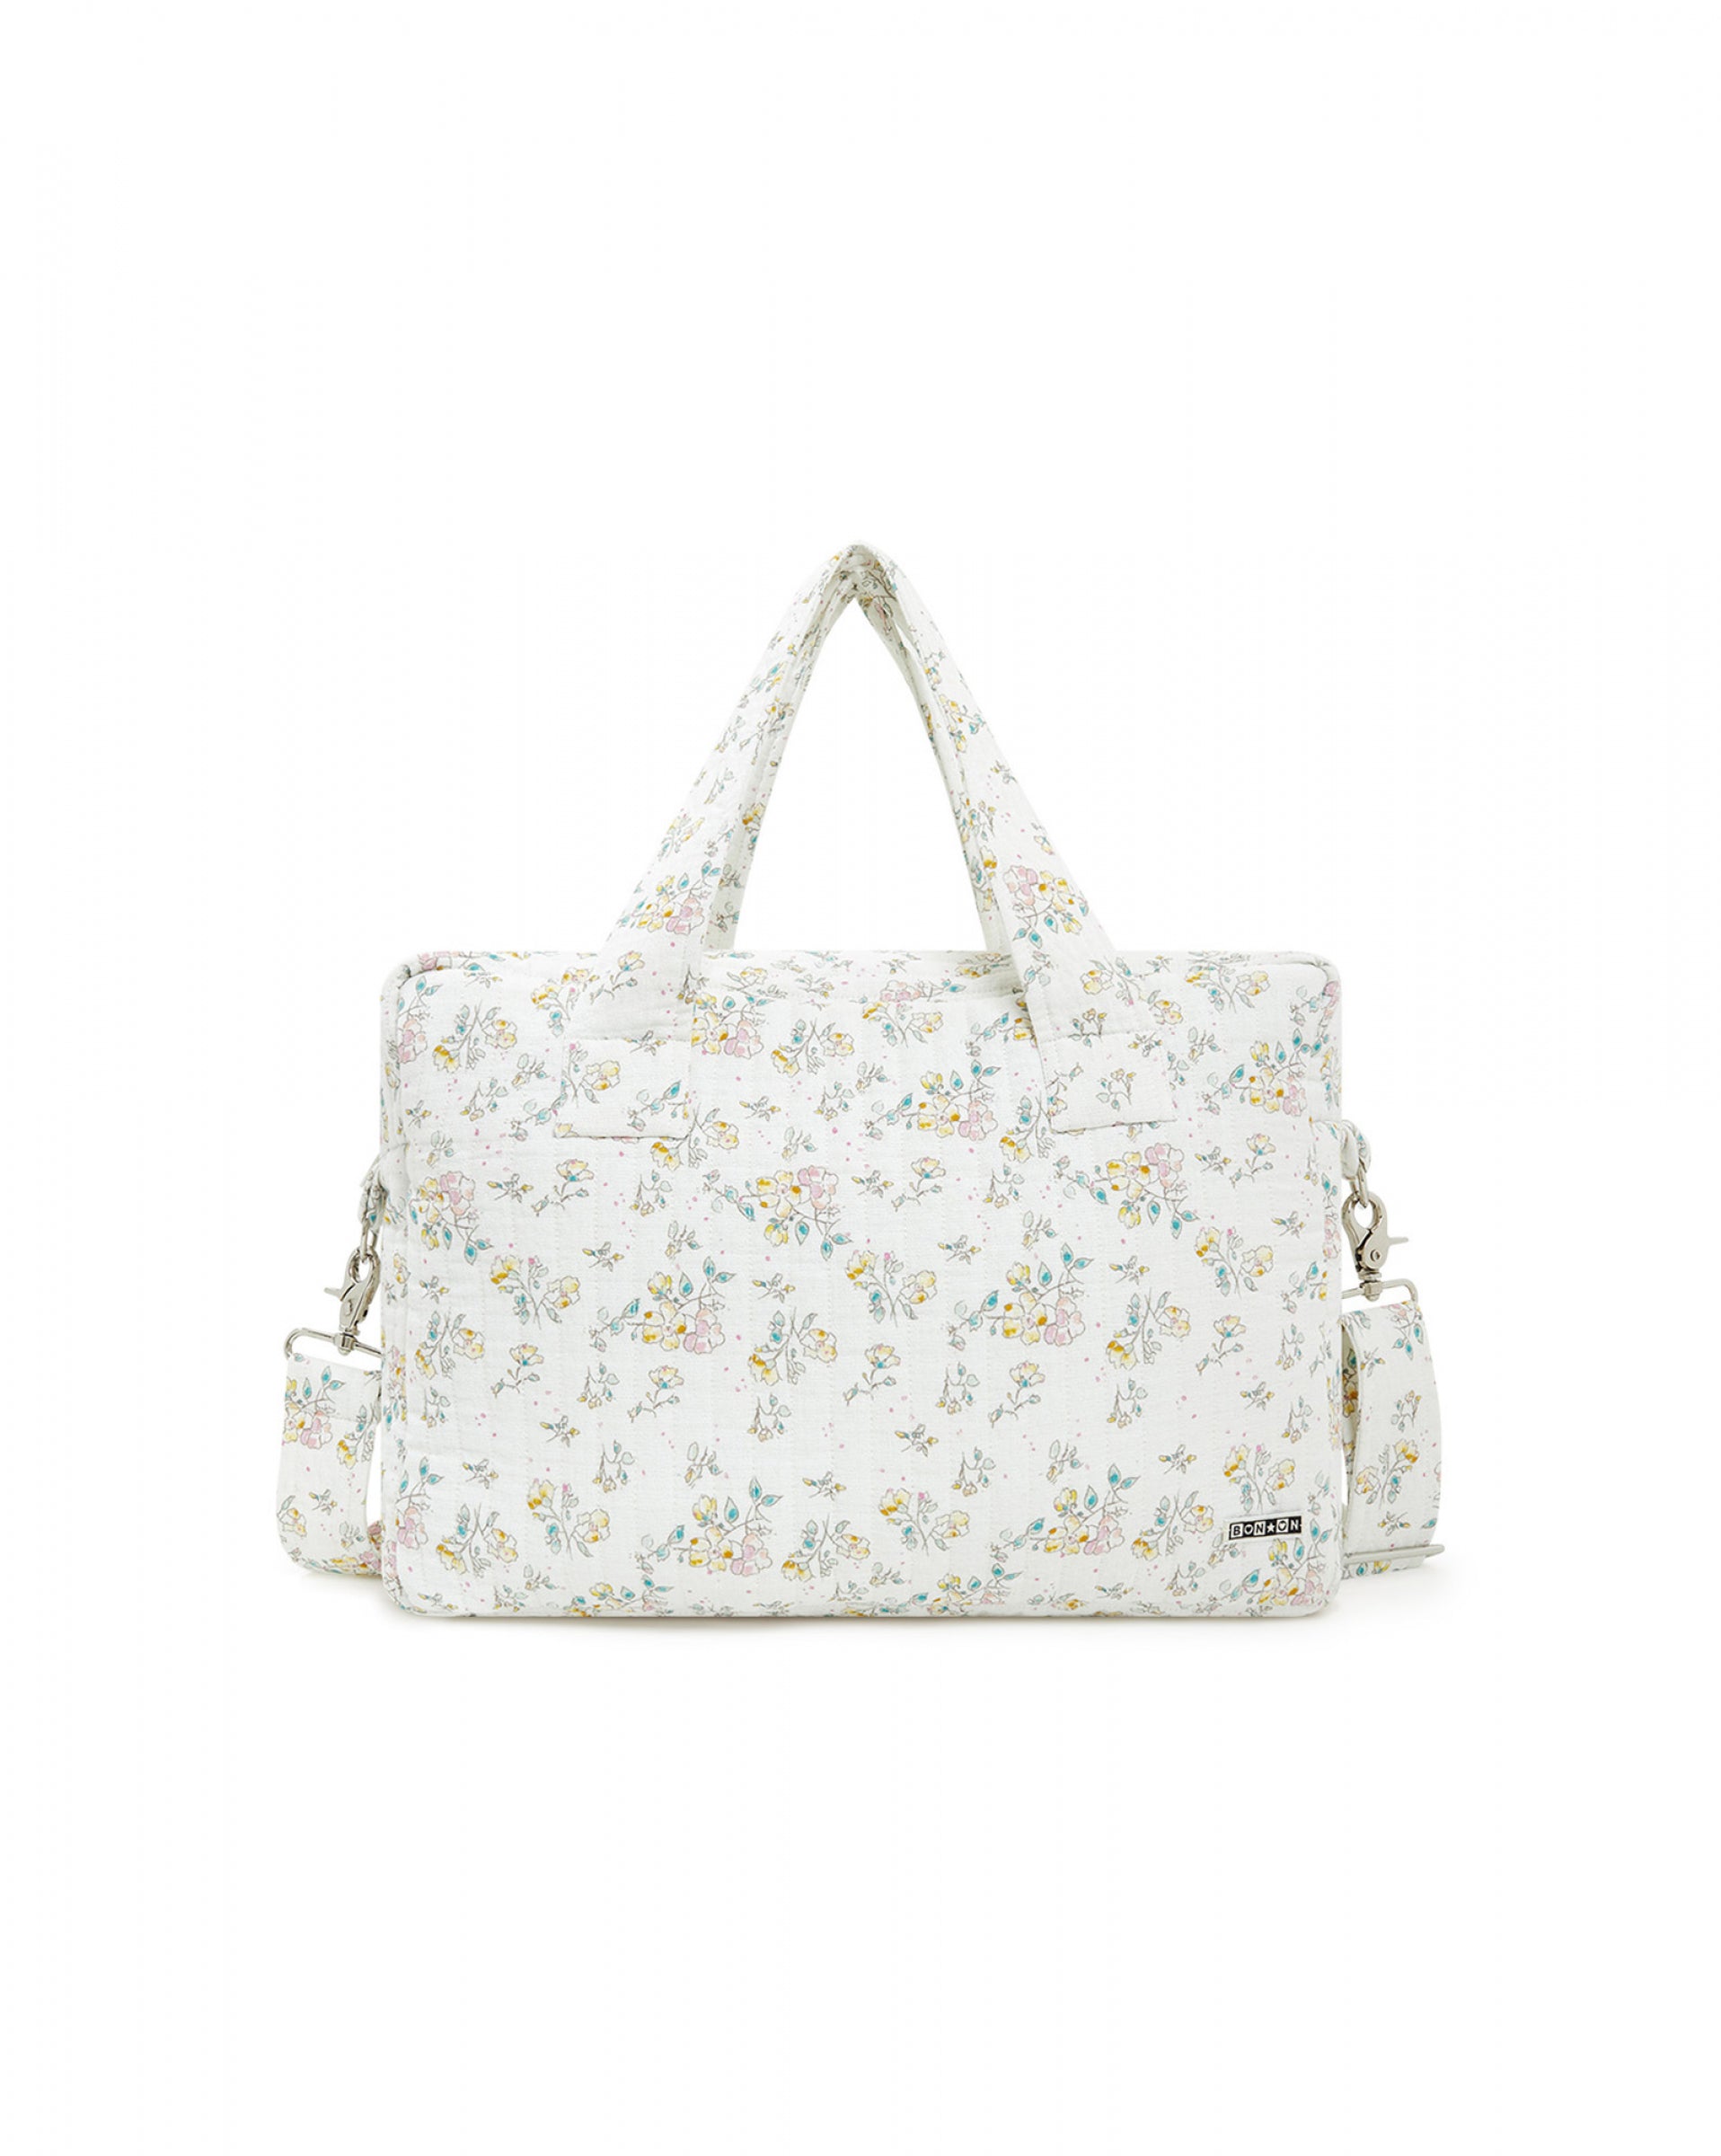 Girls White Floral Handbag